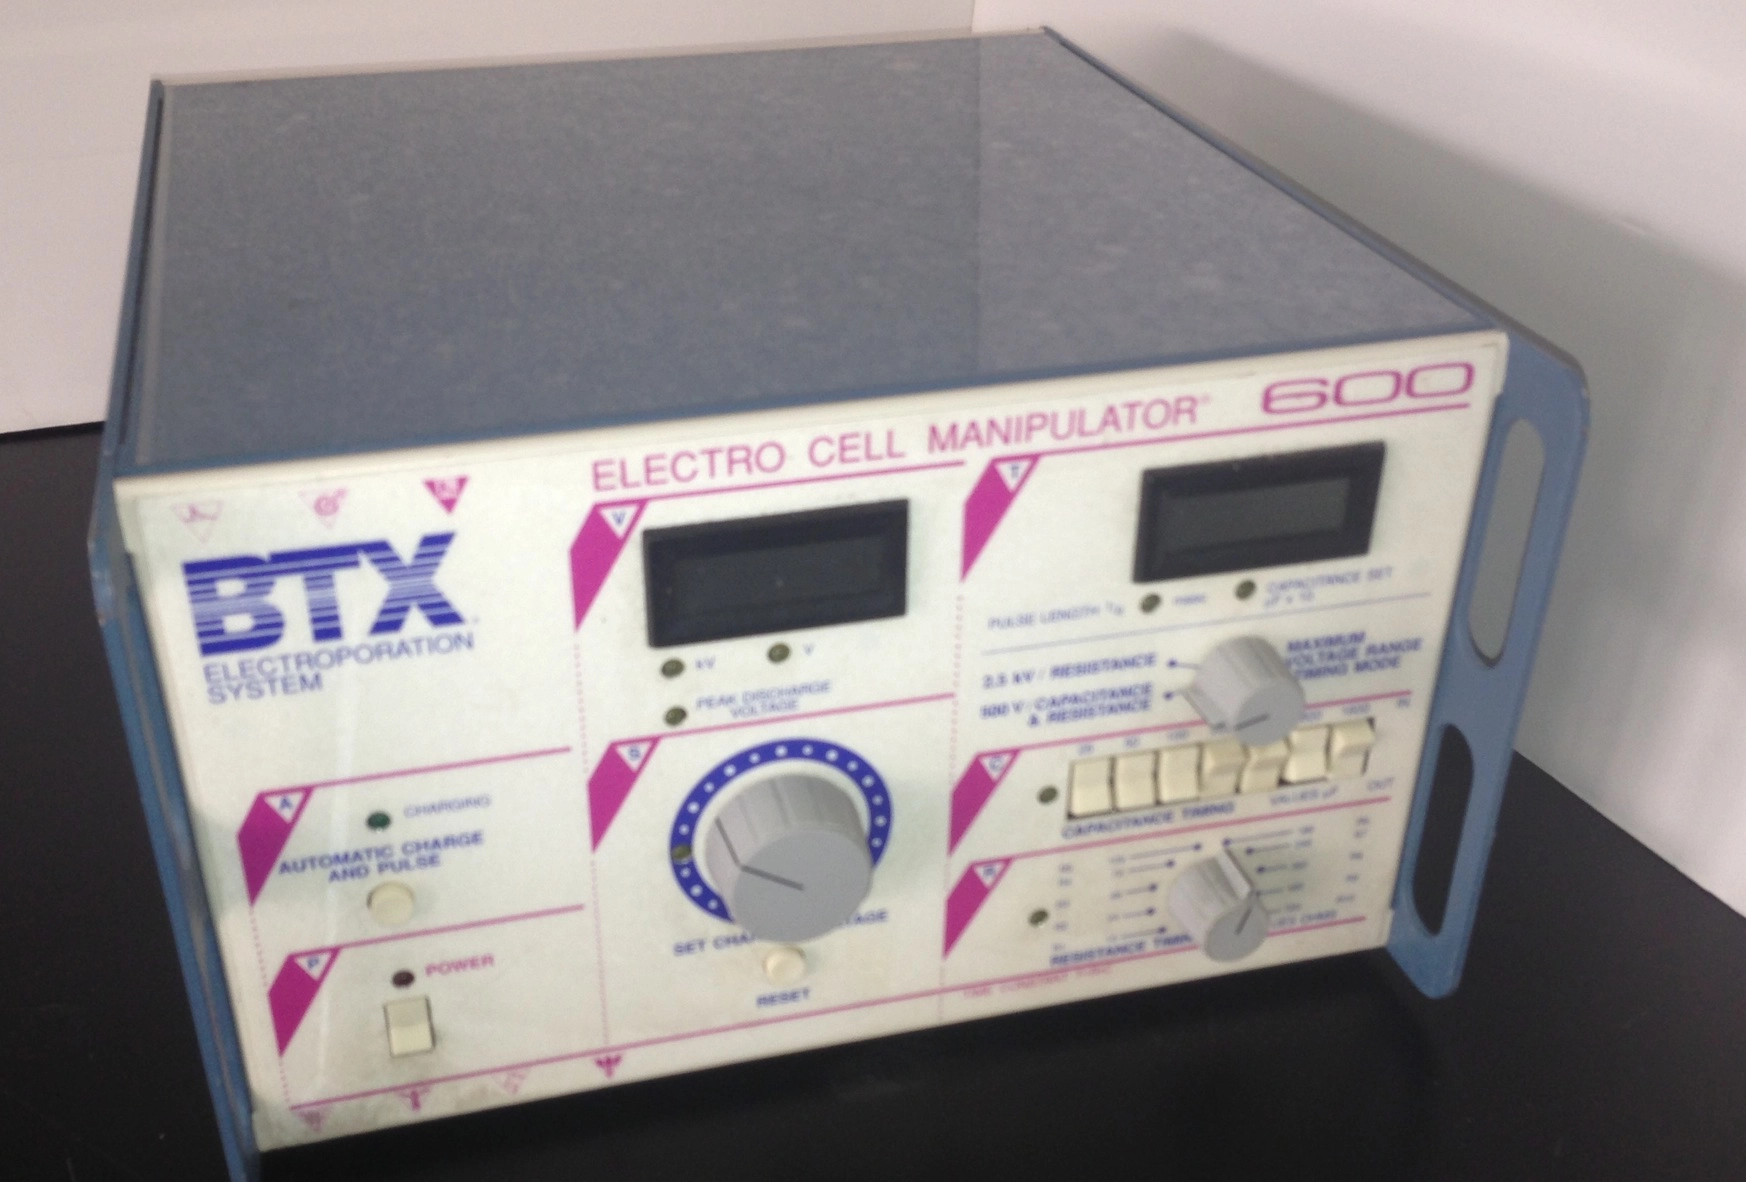 BTX Electro Cell Manipulator 600 BTX ECM-600 Electro Cell Manipulator used nice